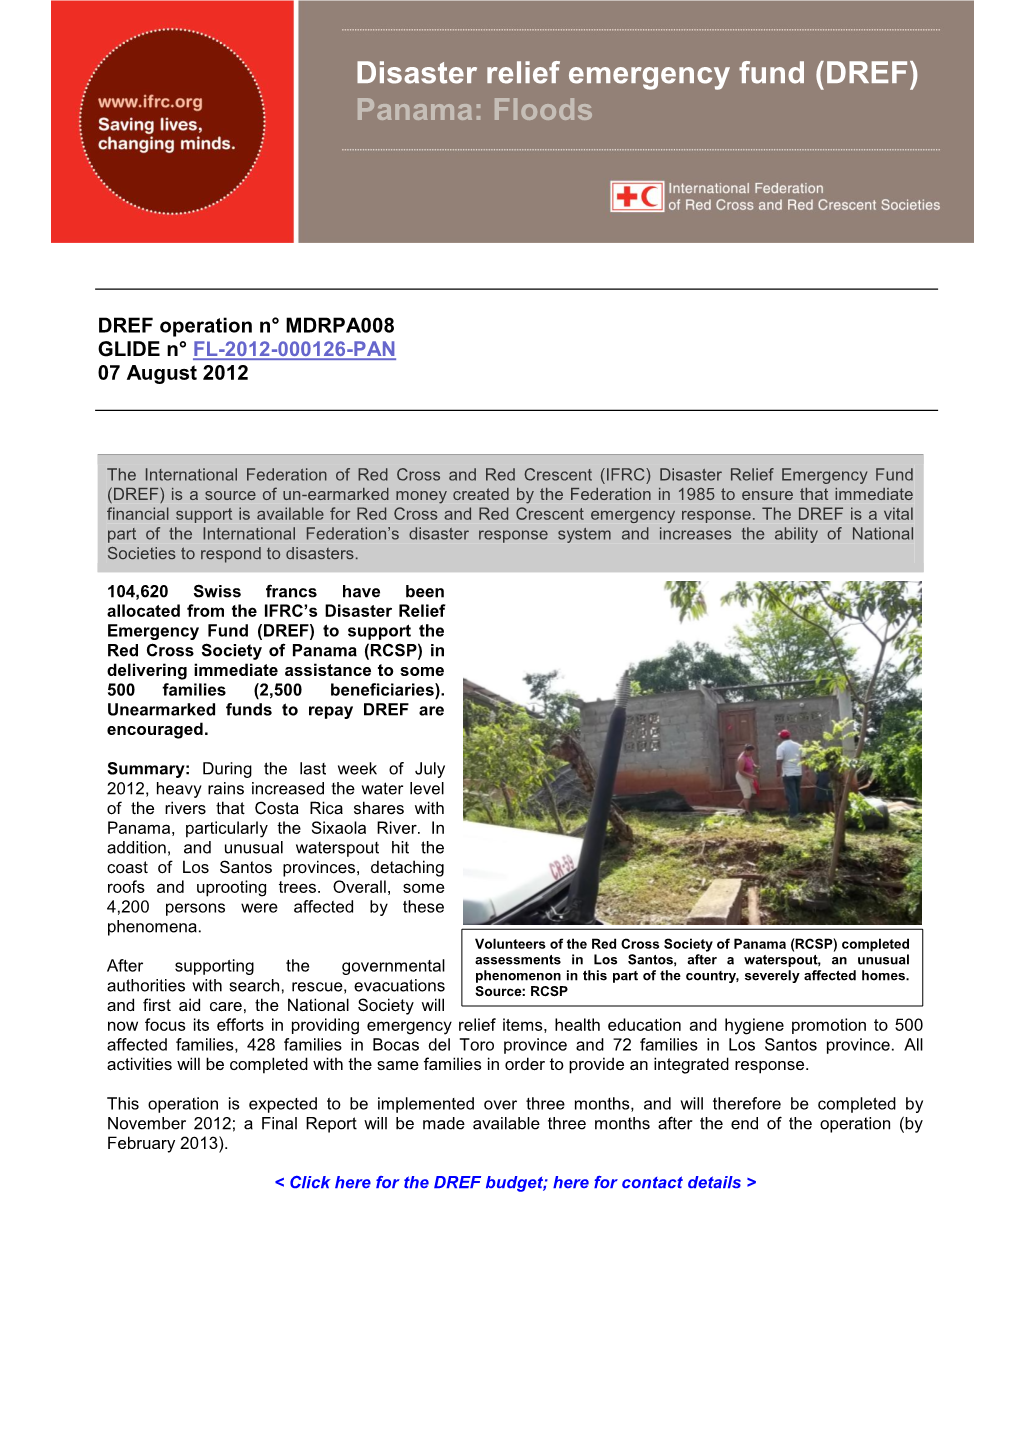 Disaster Relief Emergency Fund (DREF) Panama: Floods